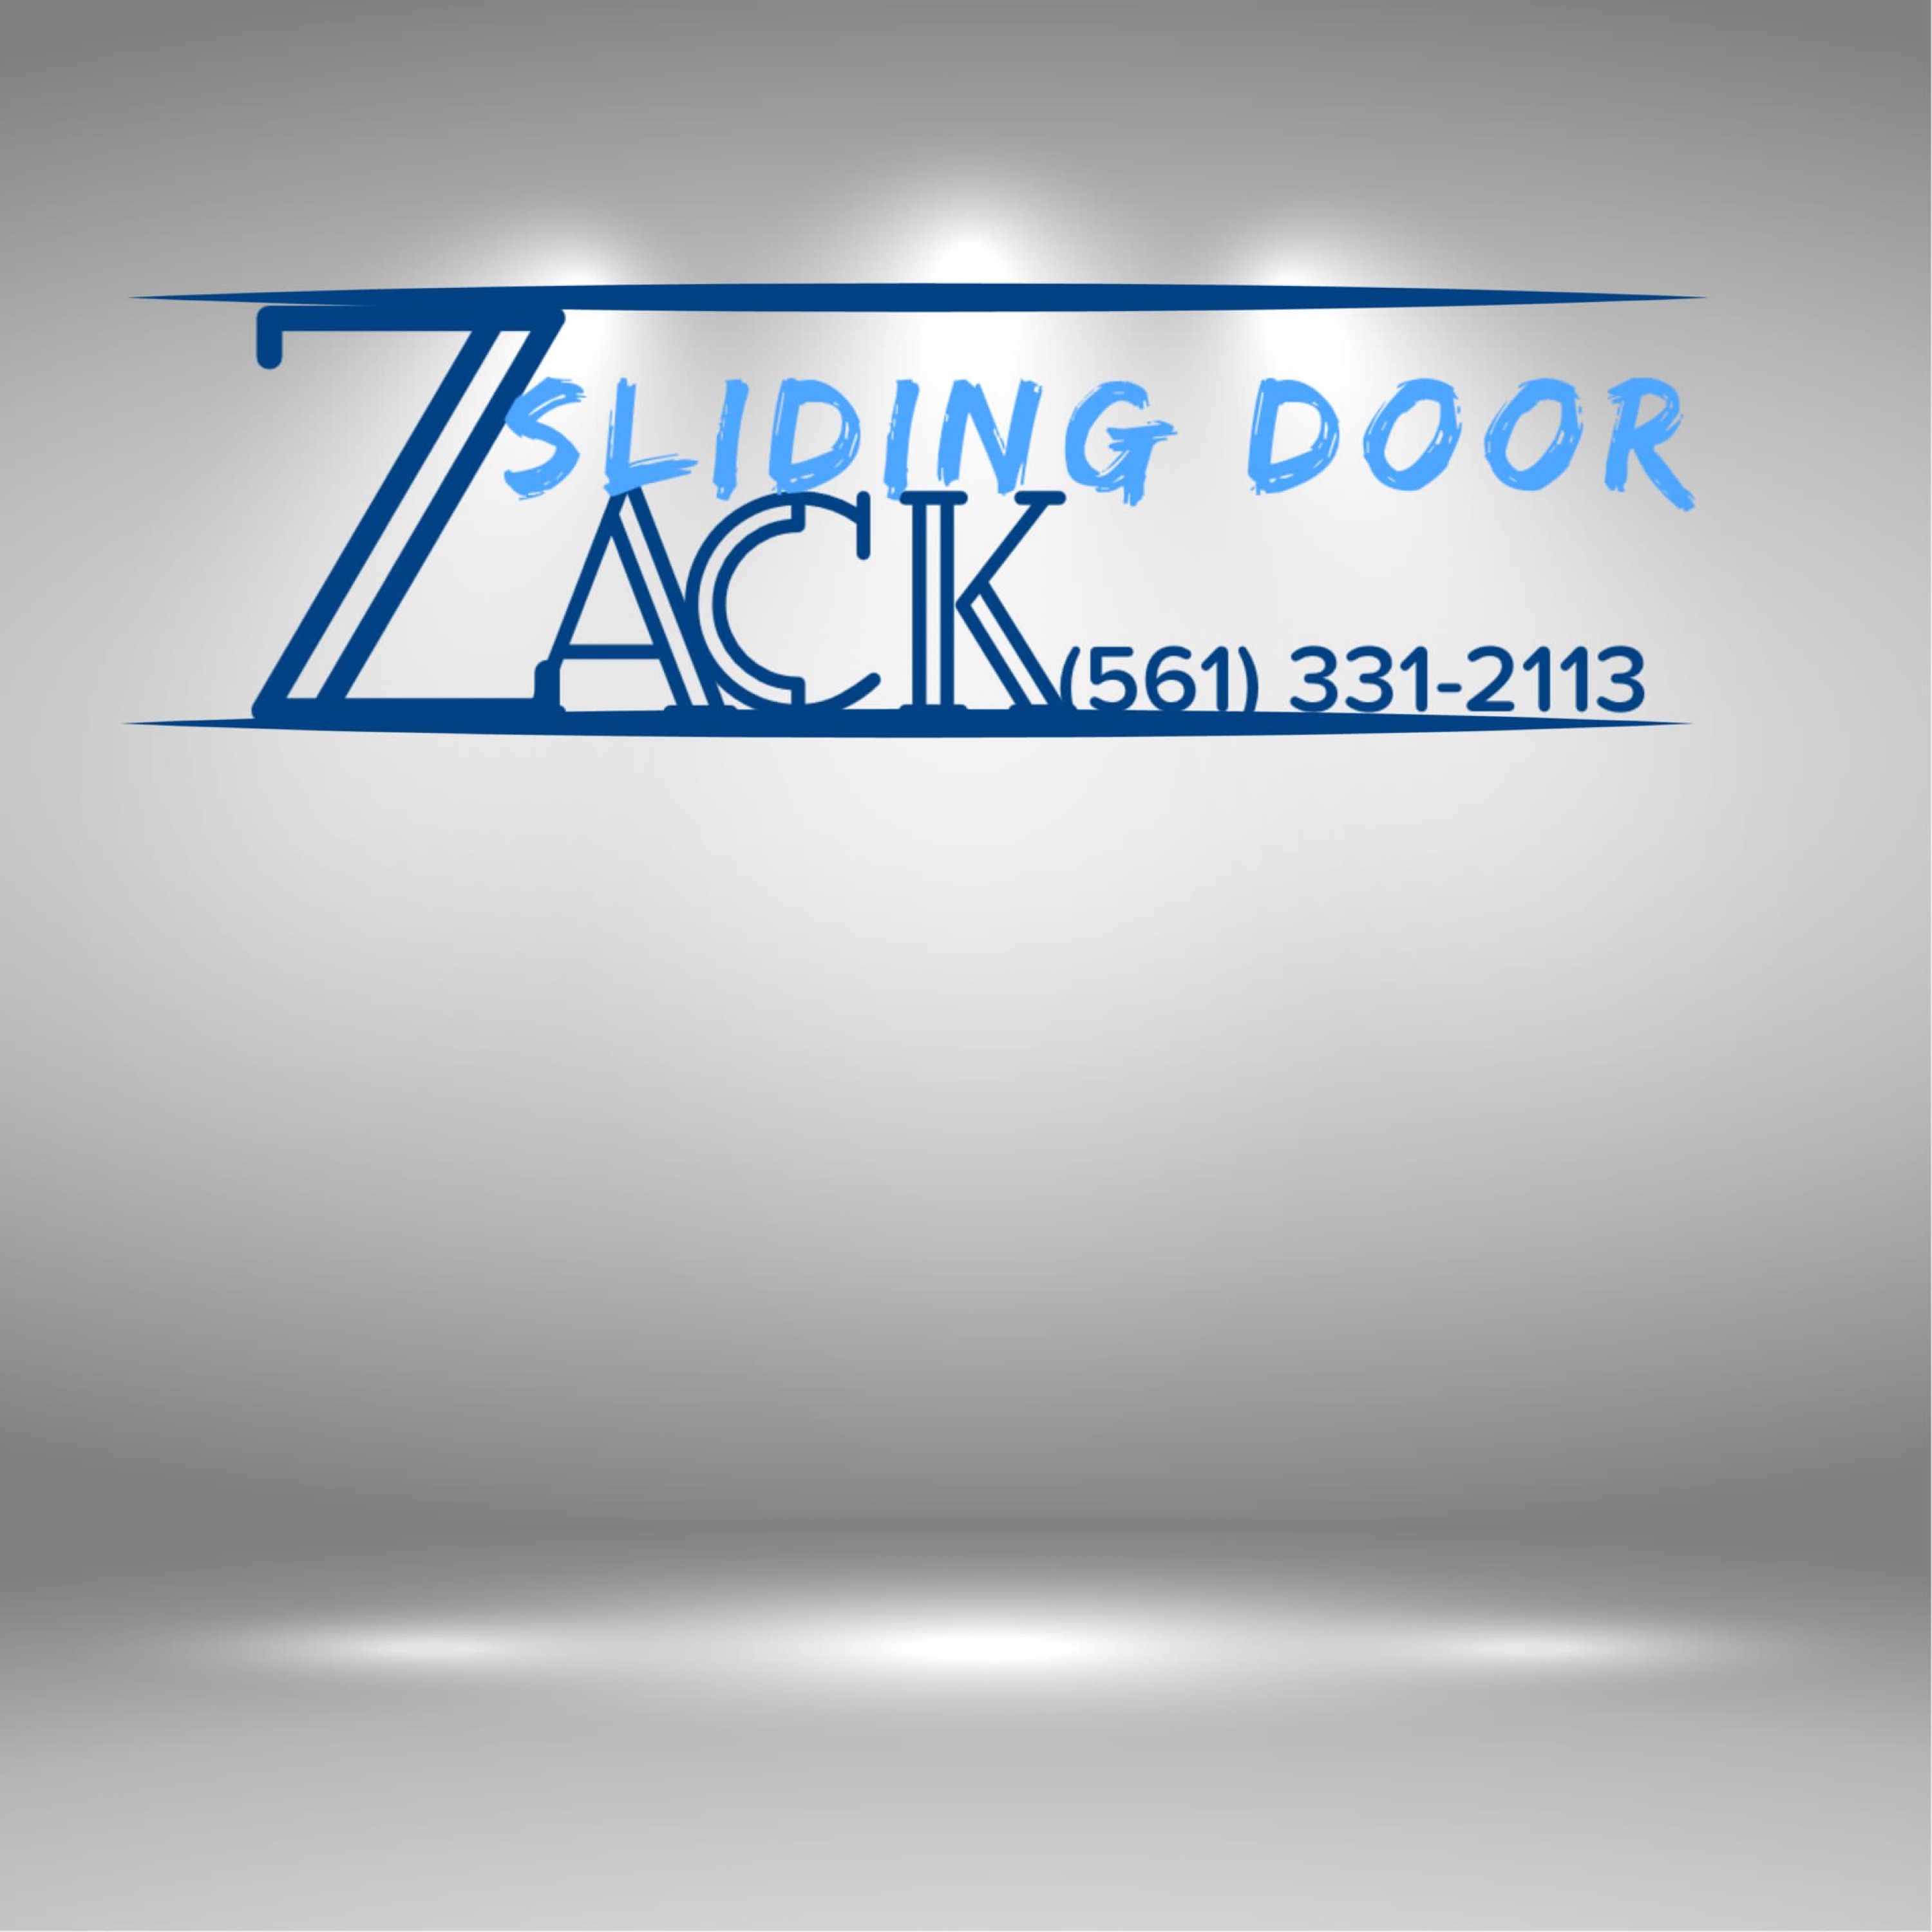 Zack's Sliding Door Service Logo